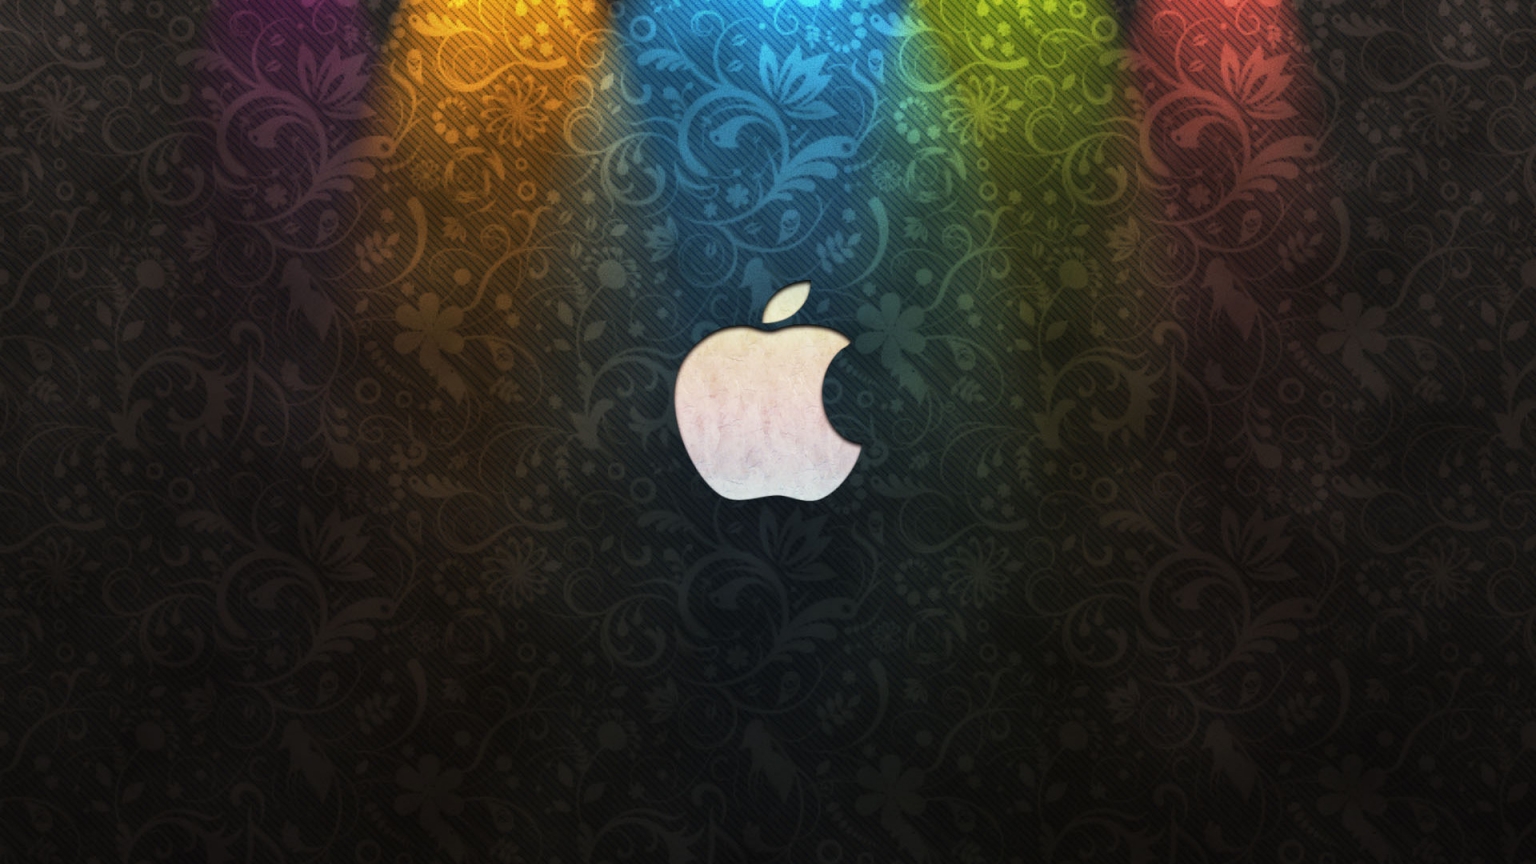 Apple Logo and Flower Background for 1536 x 864 HDTV resolution